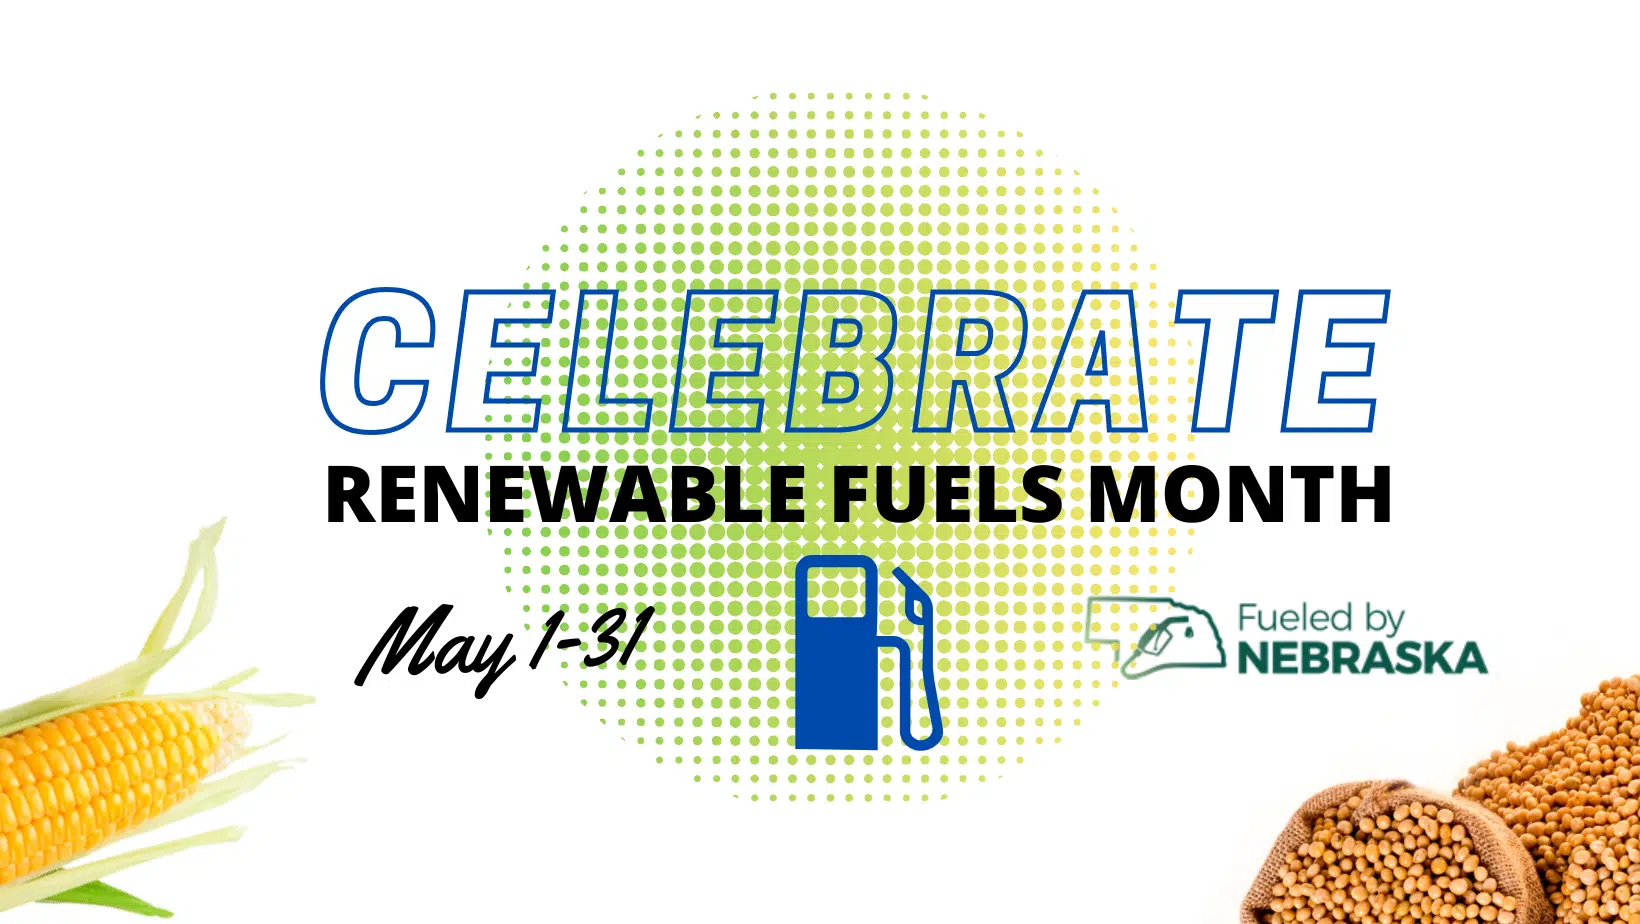 Nebraska Celebrates Renewable Fuels Month This May